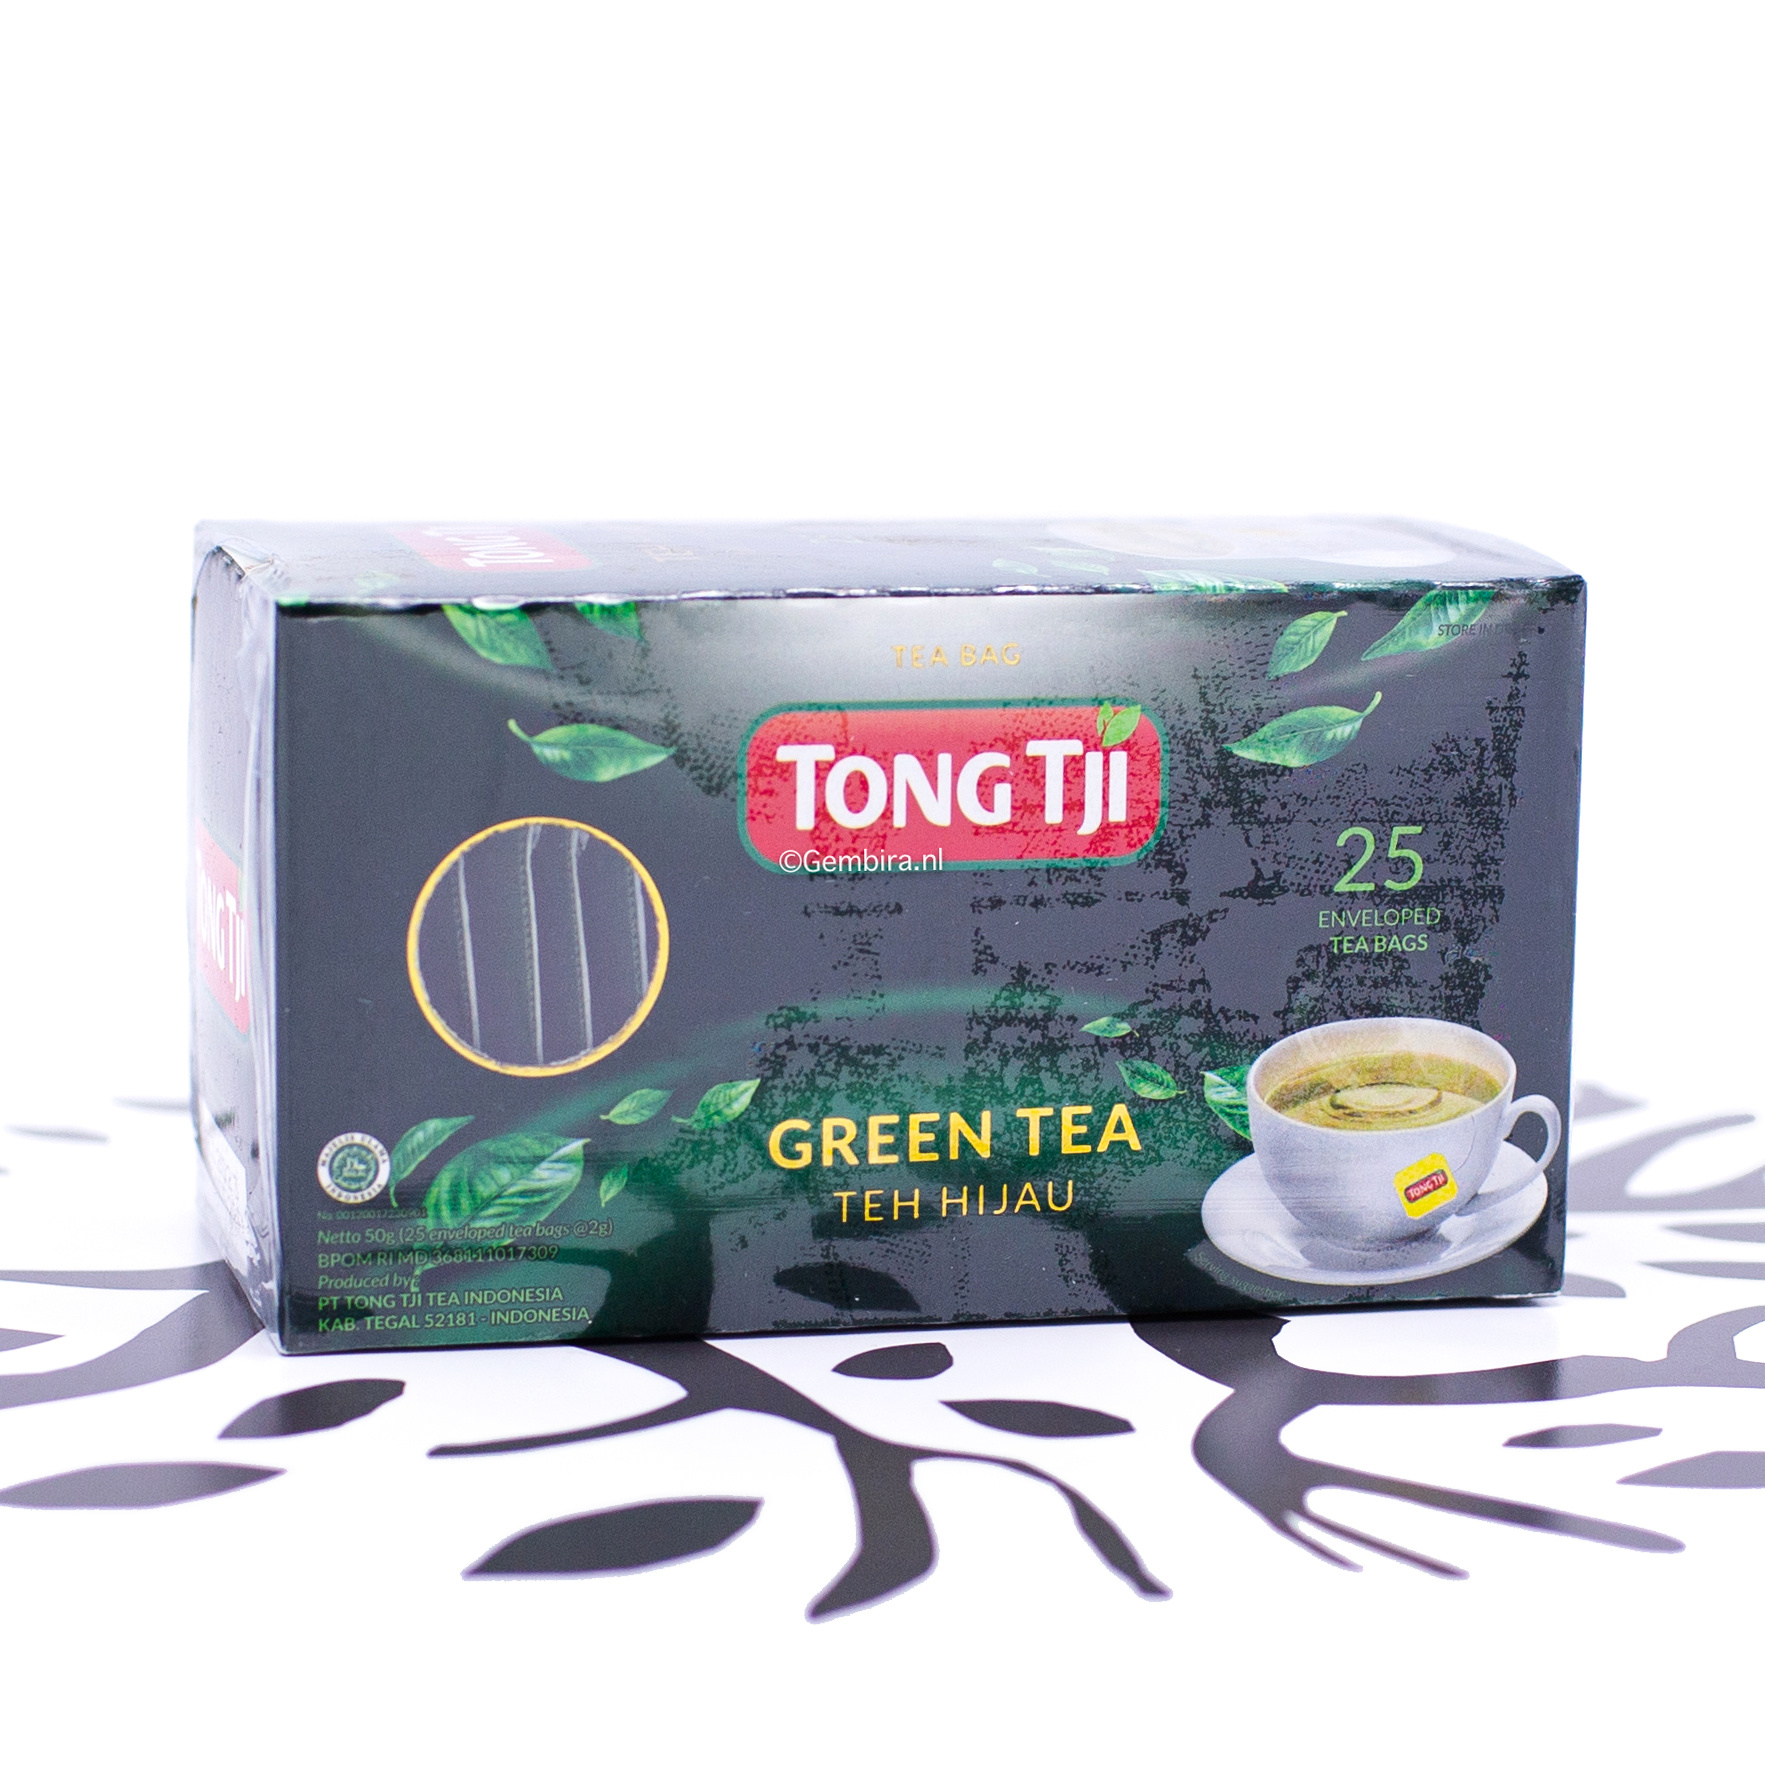 tong tji green tea teh hijau - 25 tea bags - Tokogembira.nl